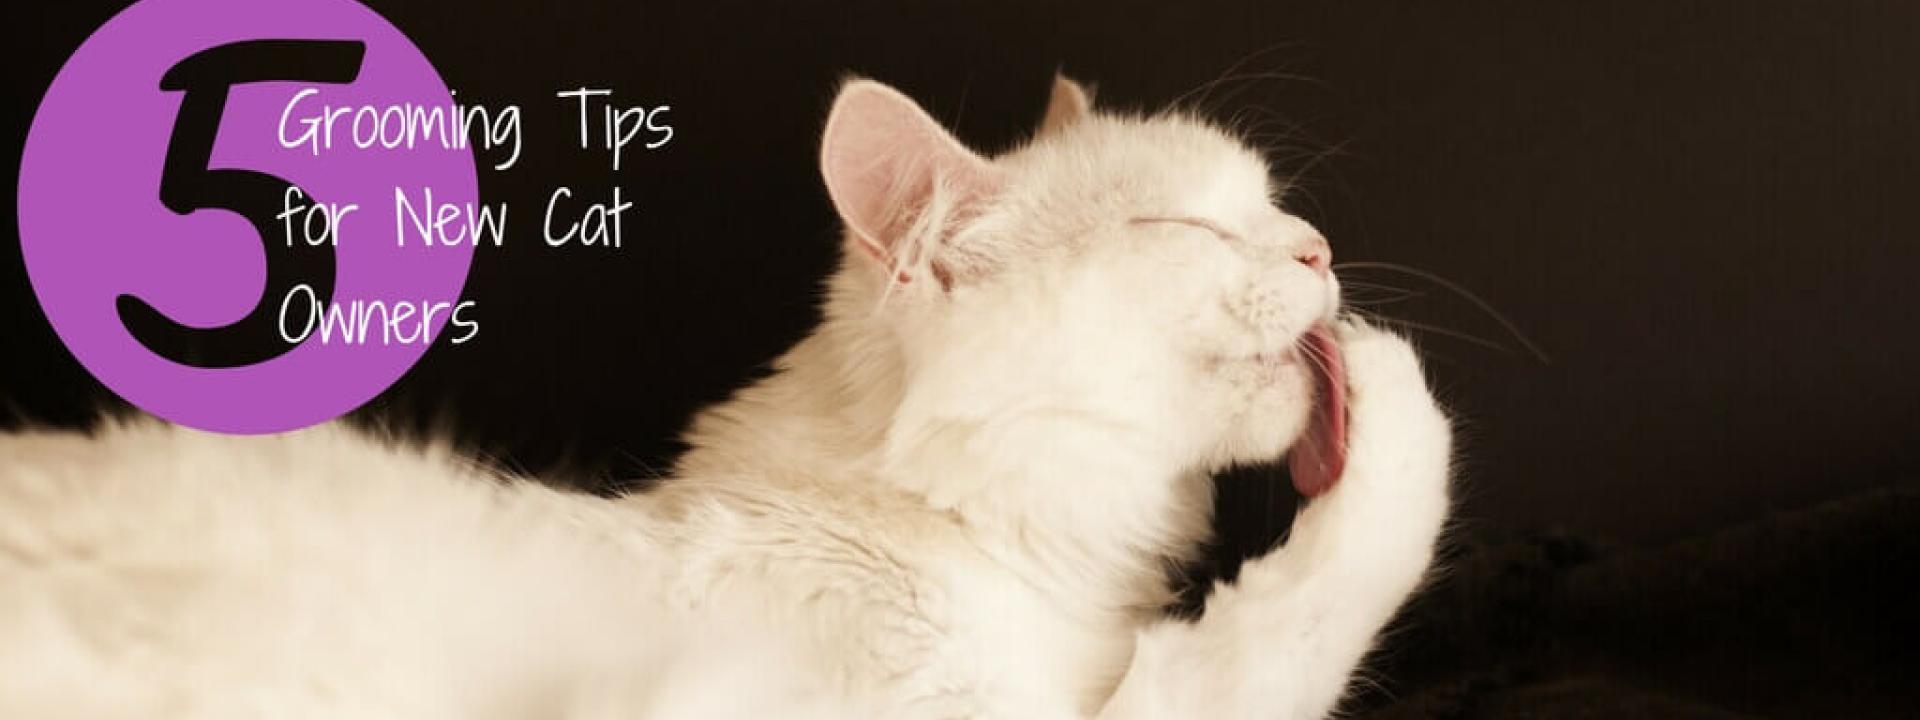 cat-grooming-tips-Blog-Header.jpg